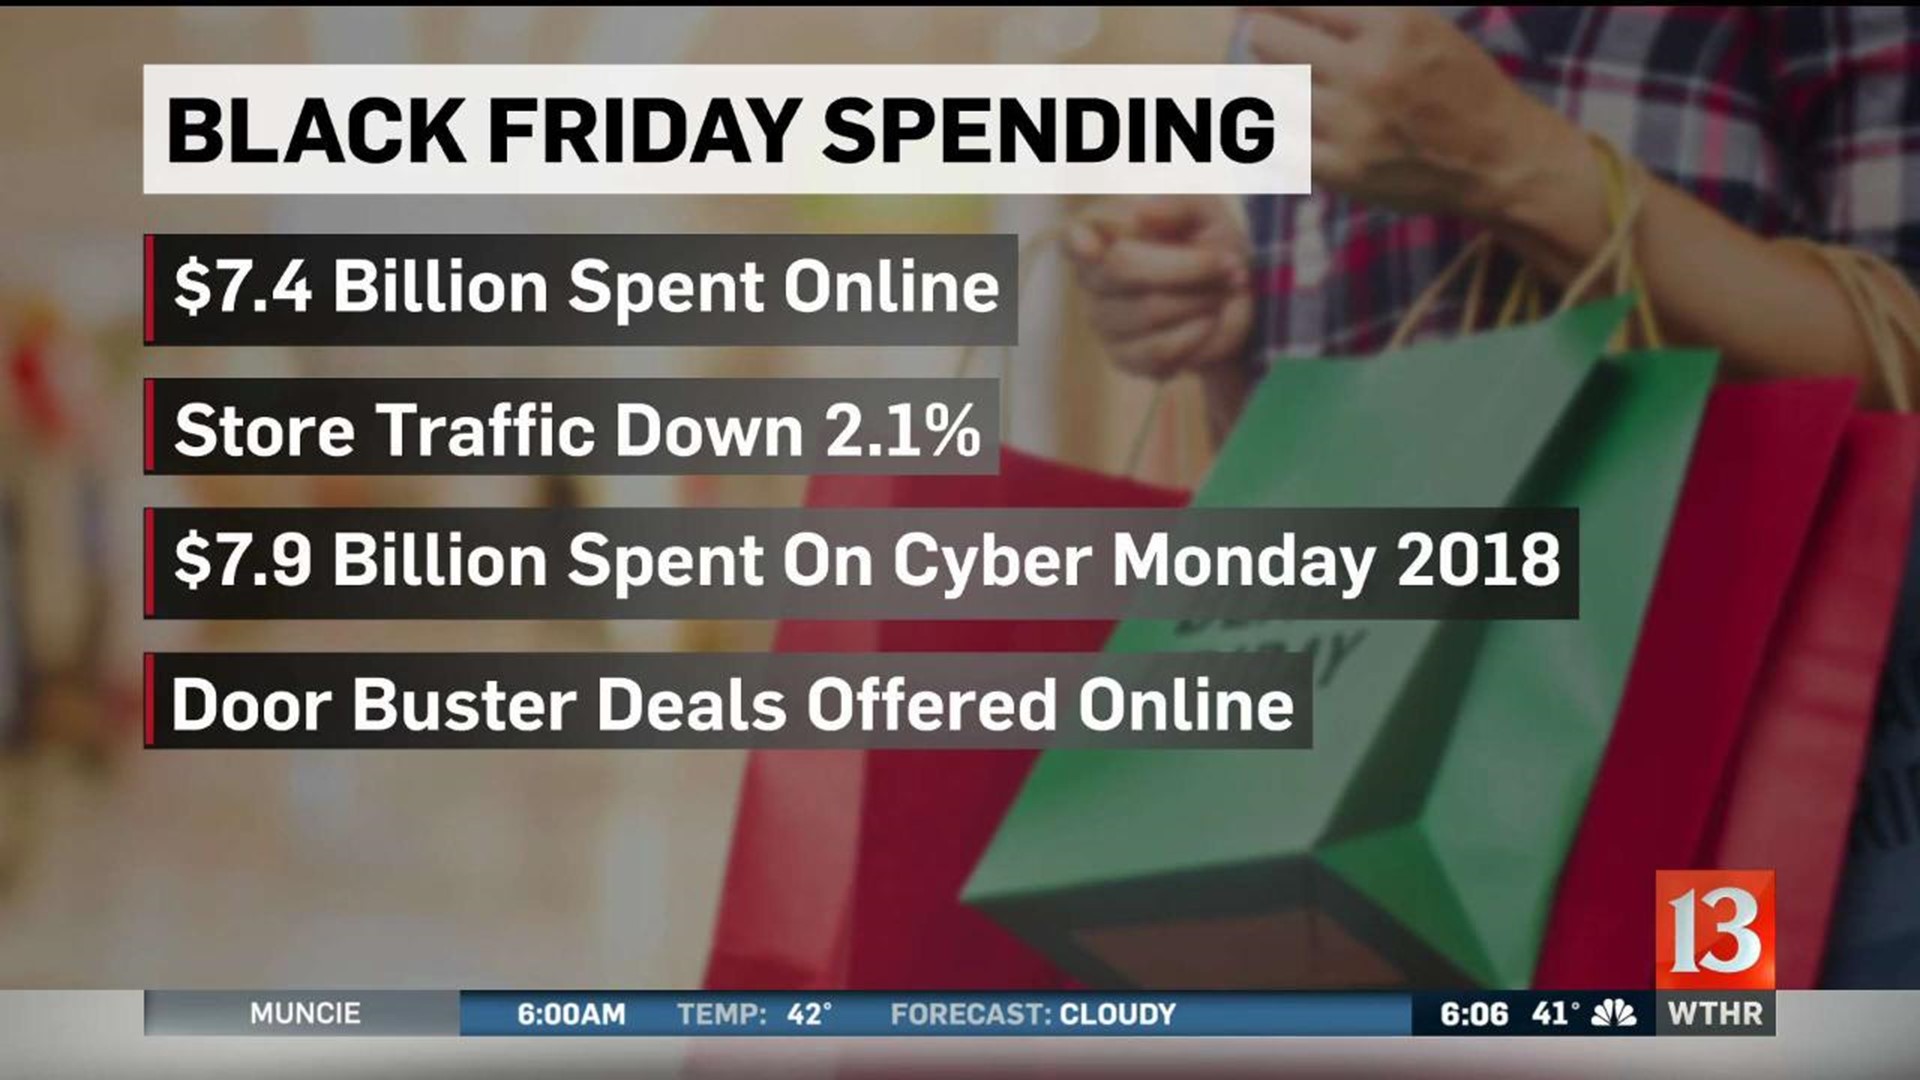 Americans spent $7.4 billion online on Black Friday